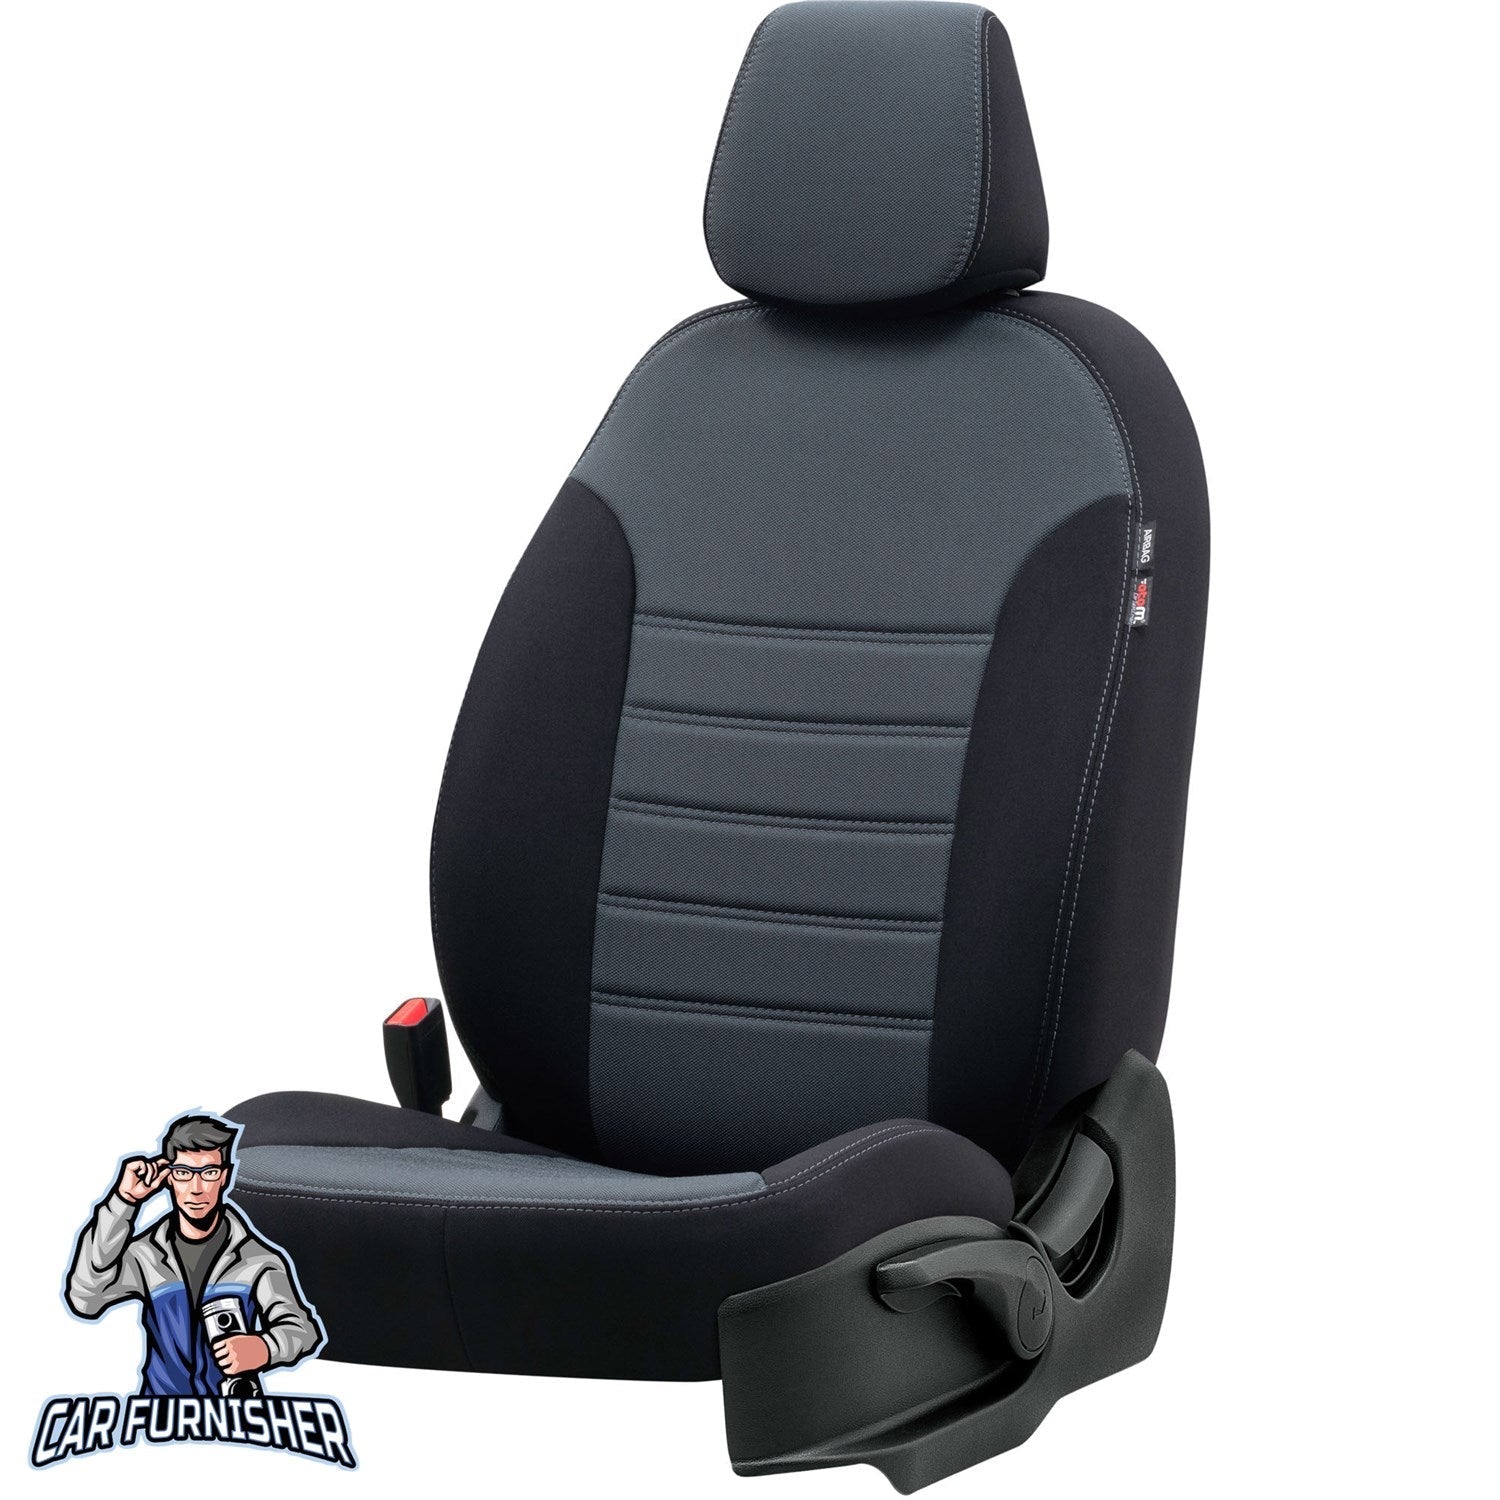 Bmw X5 Car Seat Cover 2000-2006 E53 Custom Original Design Smoked Black Full Set (5 Seats + Handrest) Fabric